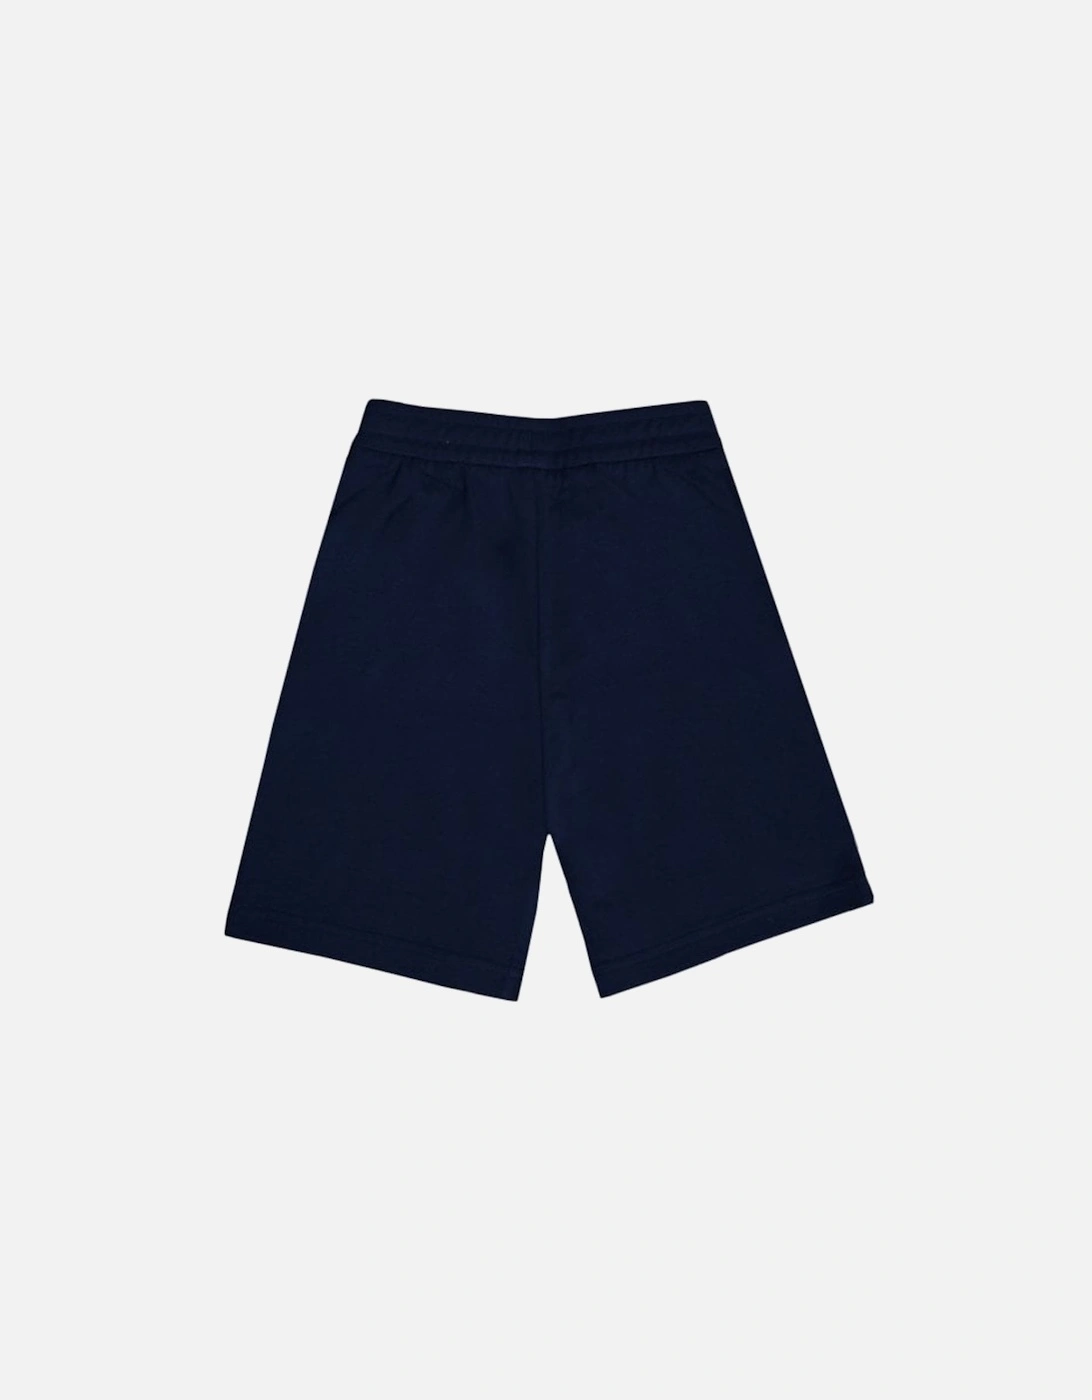 Boy's Navy Blue Shorts